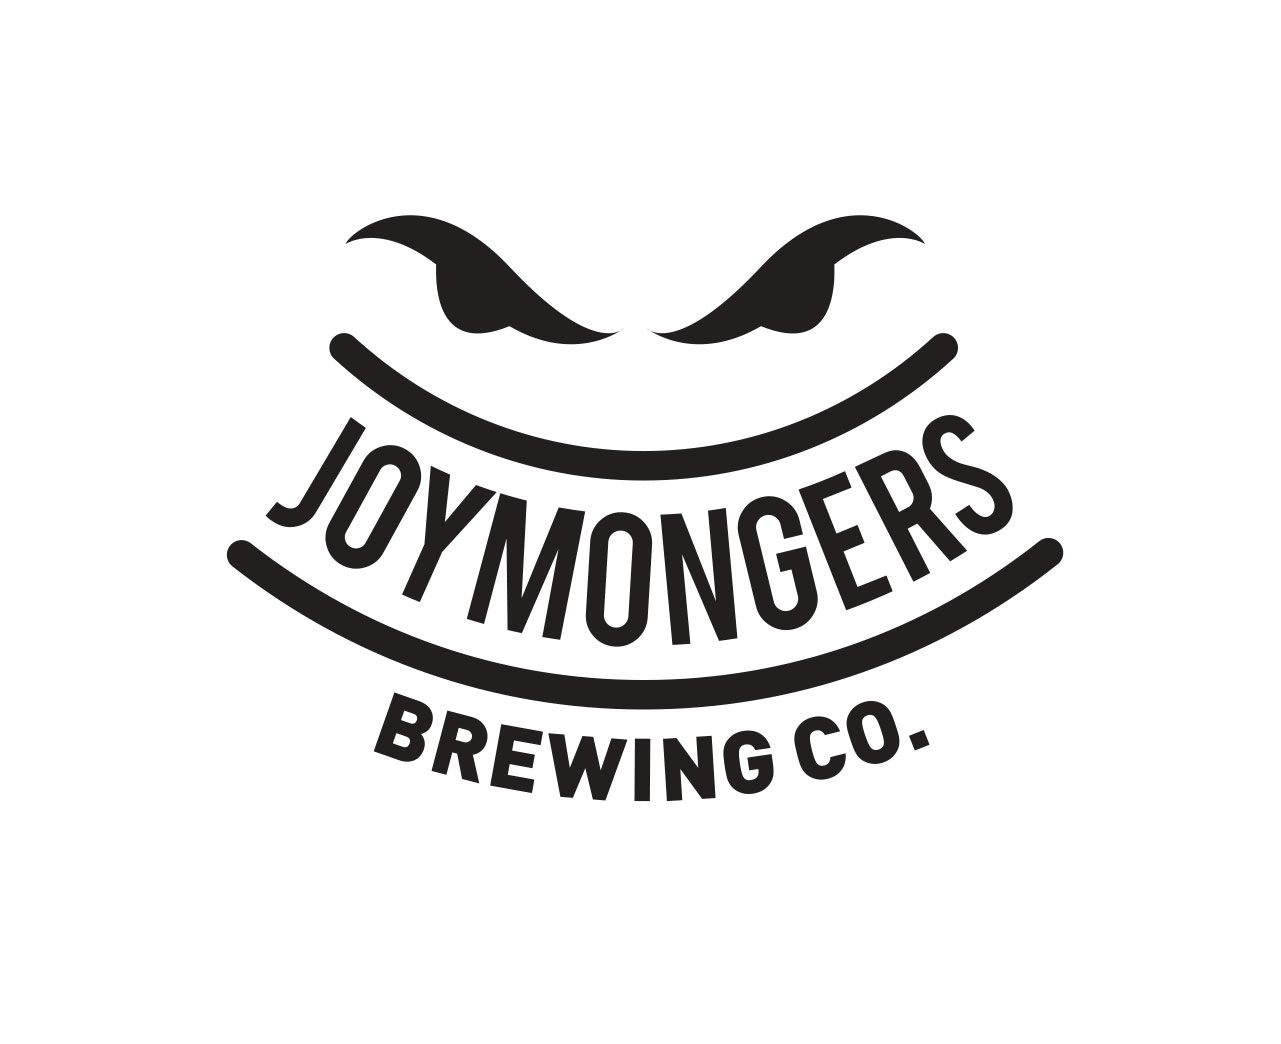 Joymongers Brewery Logo Design